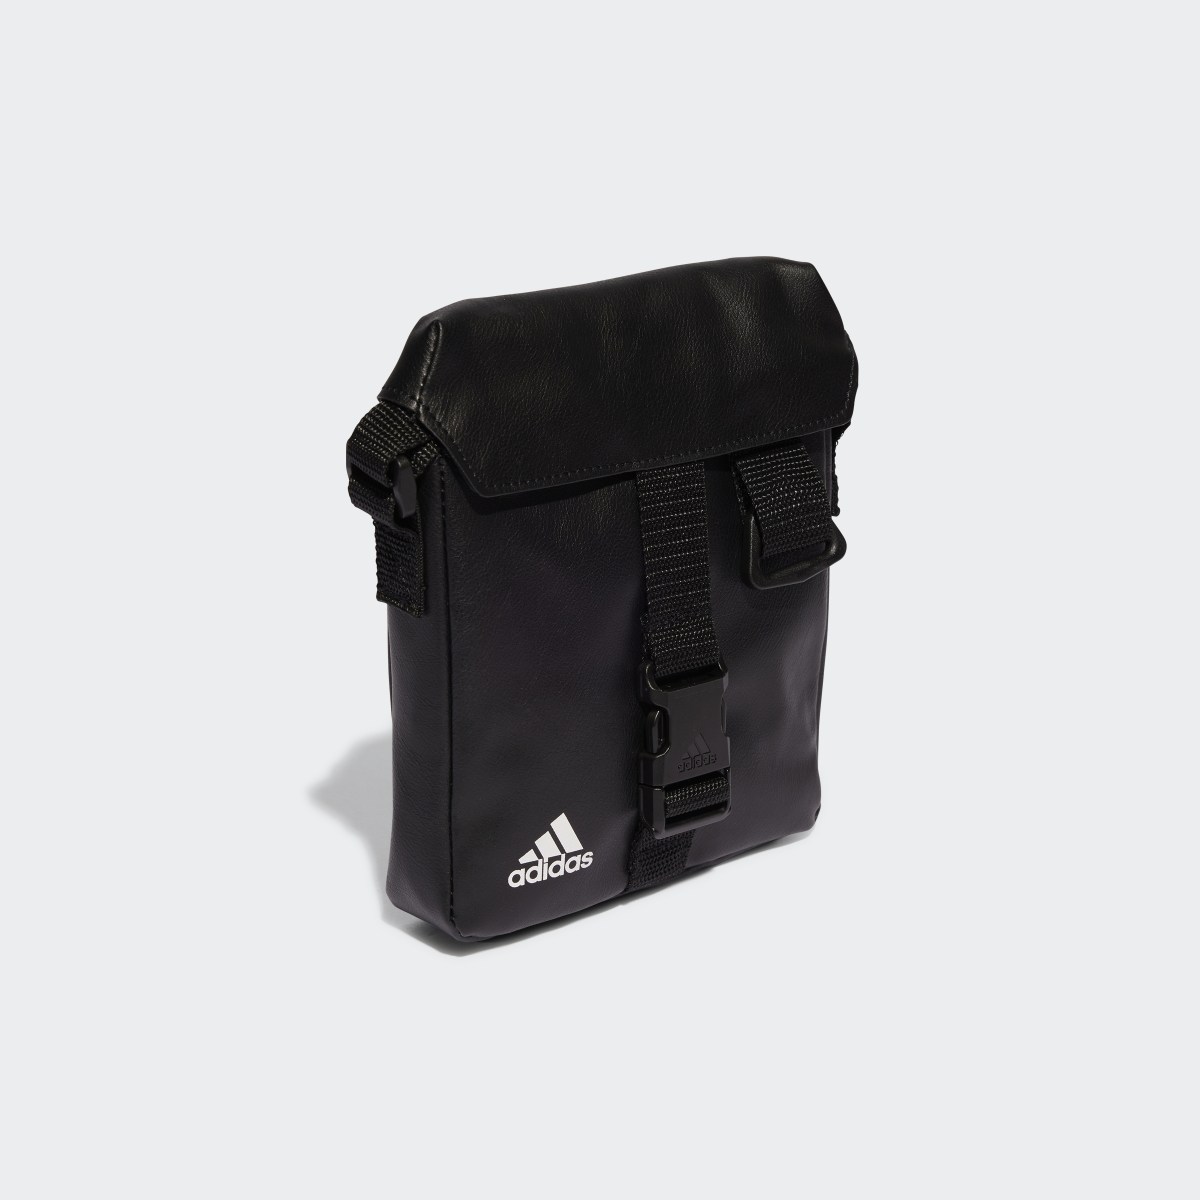 Adidas Torba Essentials Small Bag. 4